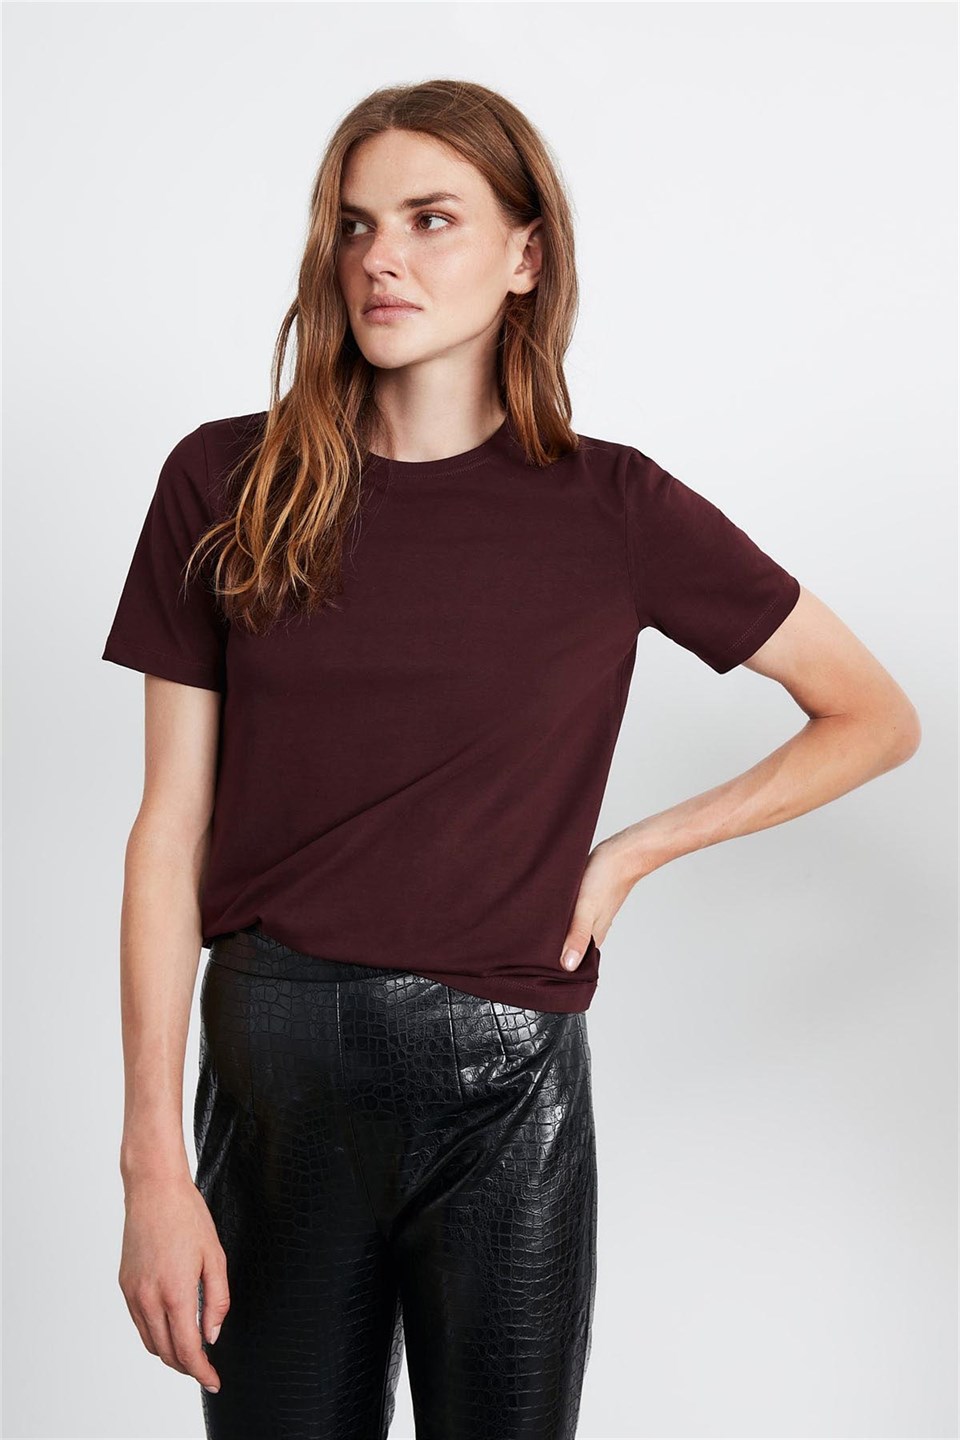 HANNAH Kadın Bordo Düz Renk Yuvarlak Yaka Comfort Fit T-Shirt